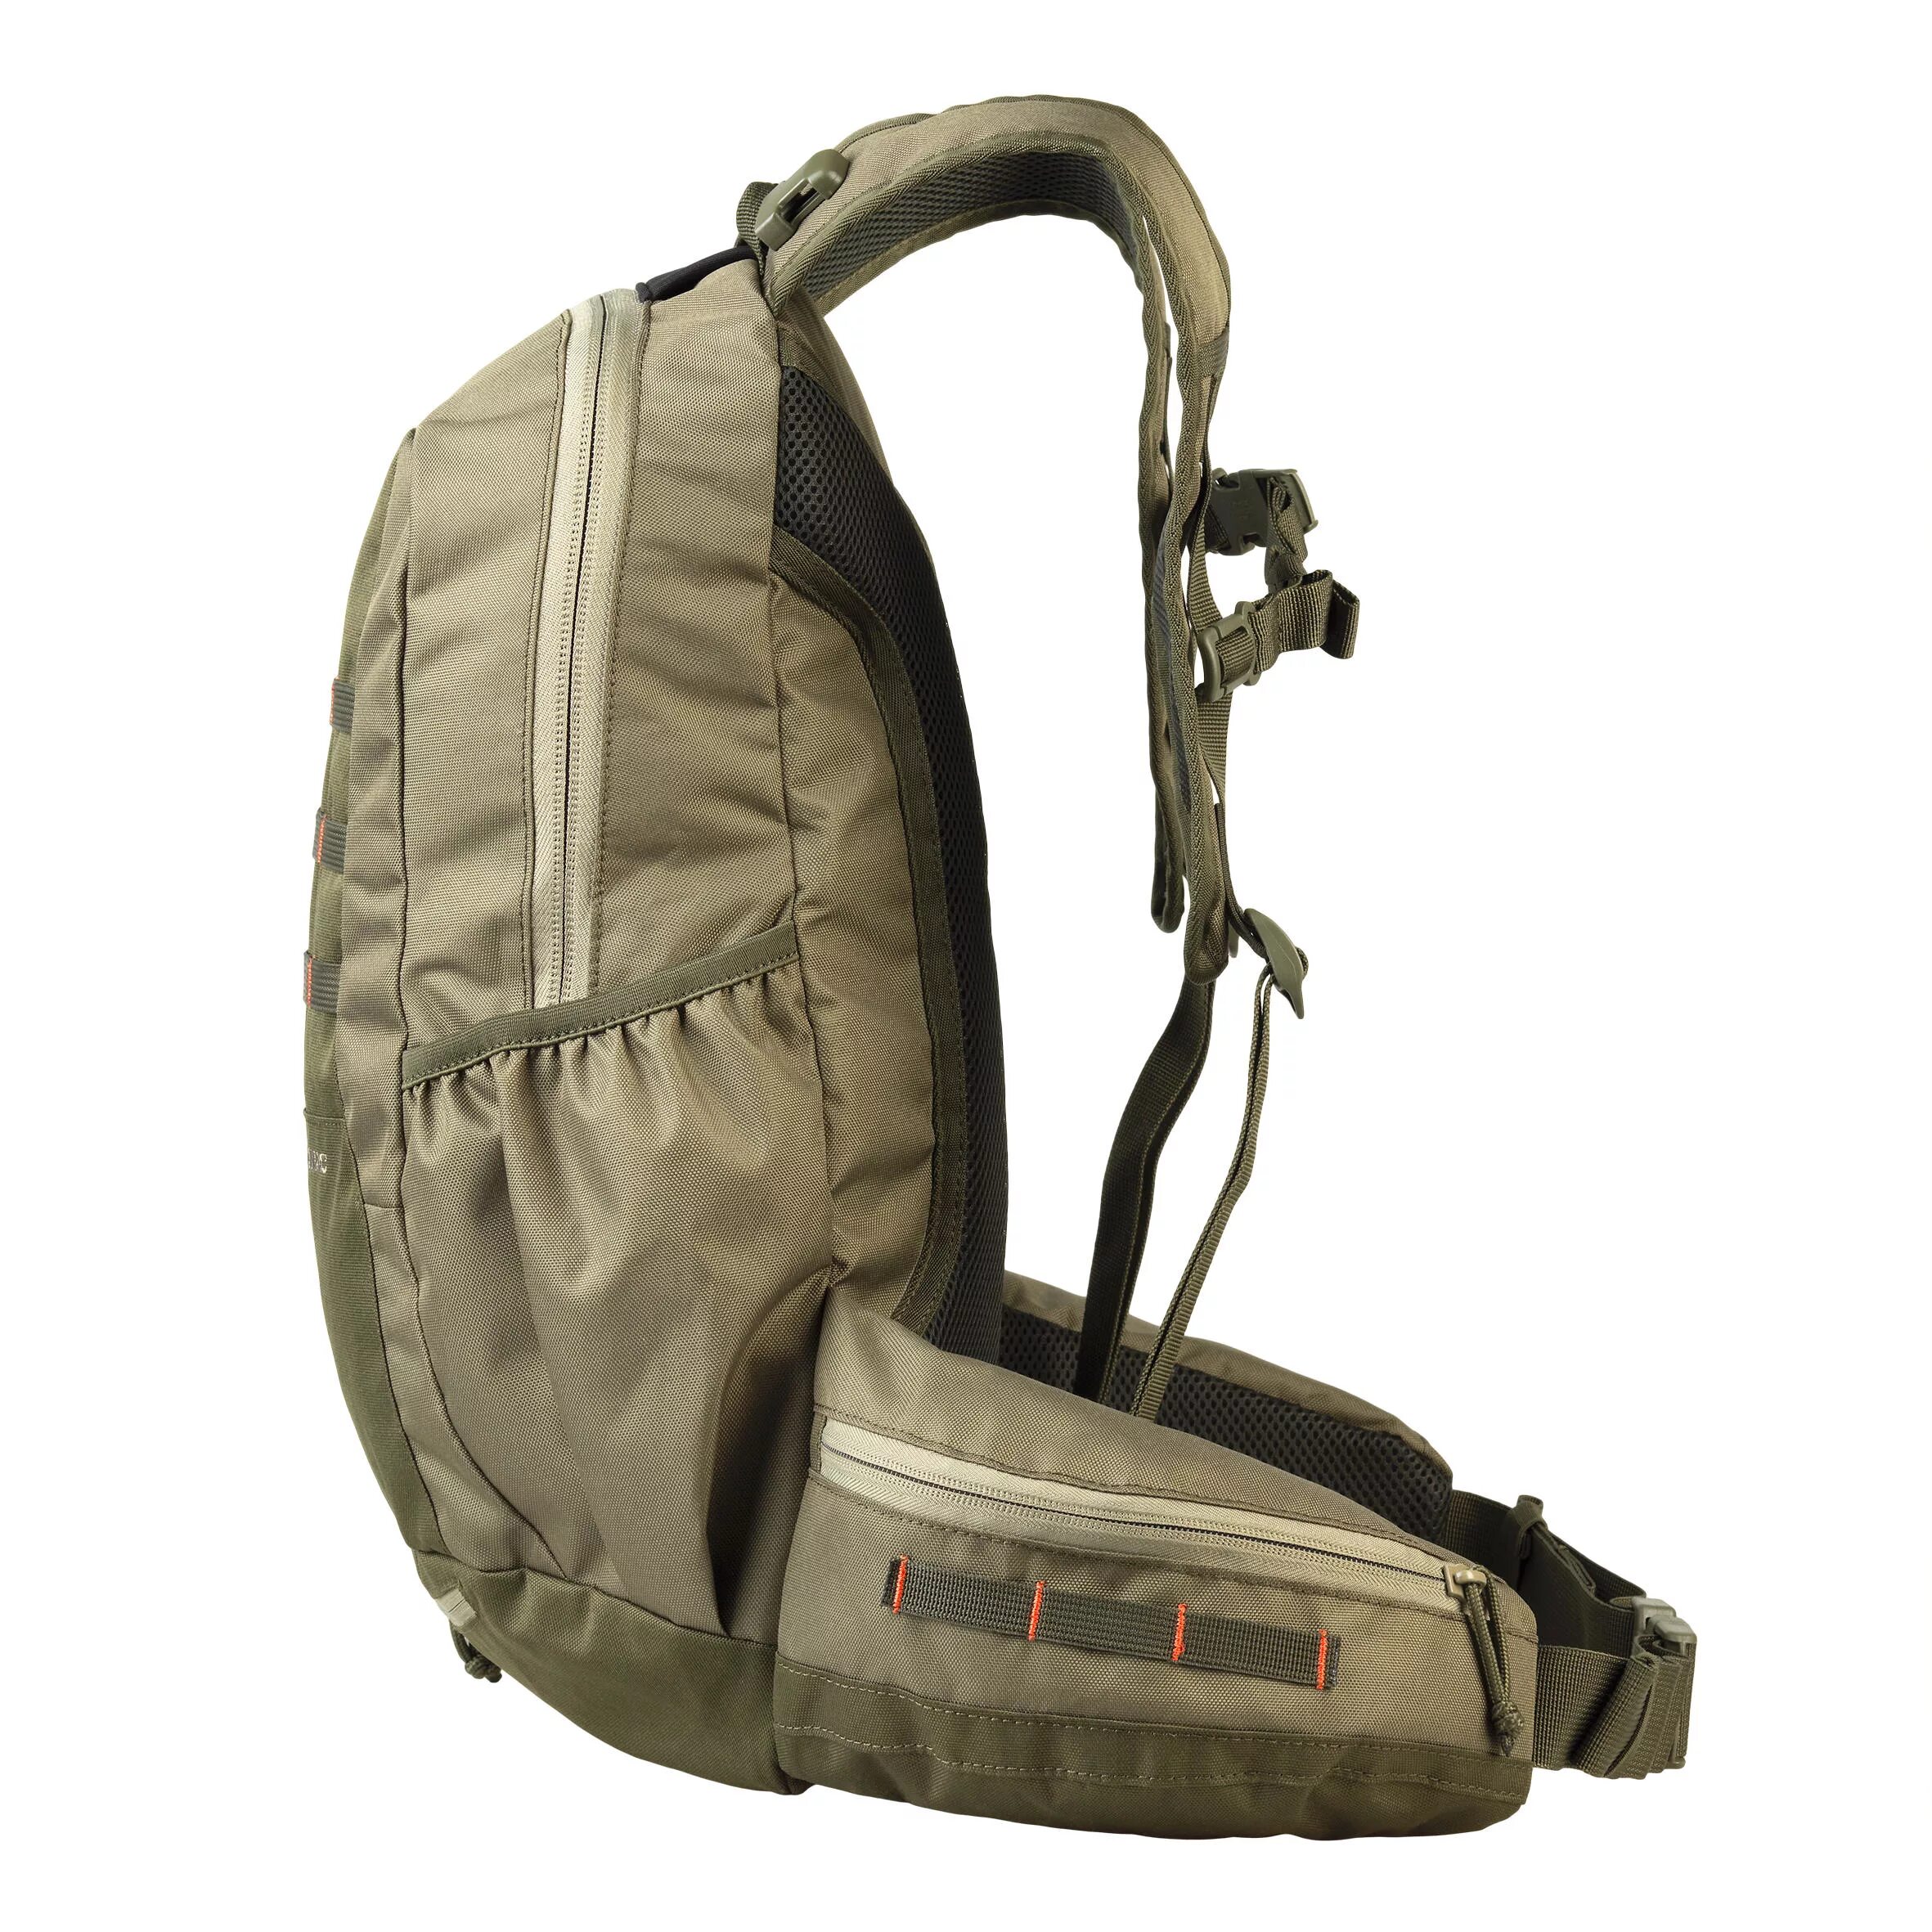 Рюкзак для охоты SOLOGNAC X-access 20 л.. SOLOGNAC рюкзак 30 л x-access. Охотничий рюкзак 50l x-access. SOLOGNAC Backpack 50l.